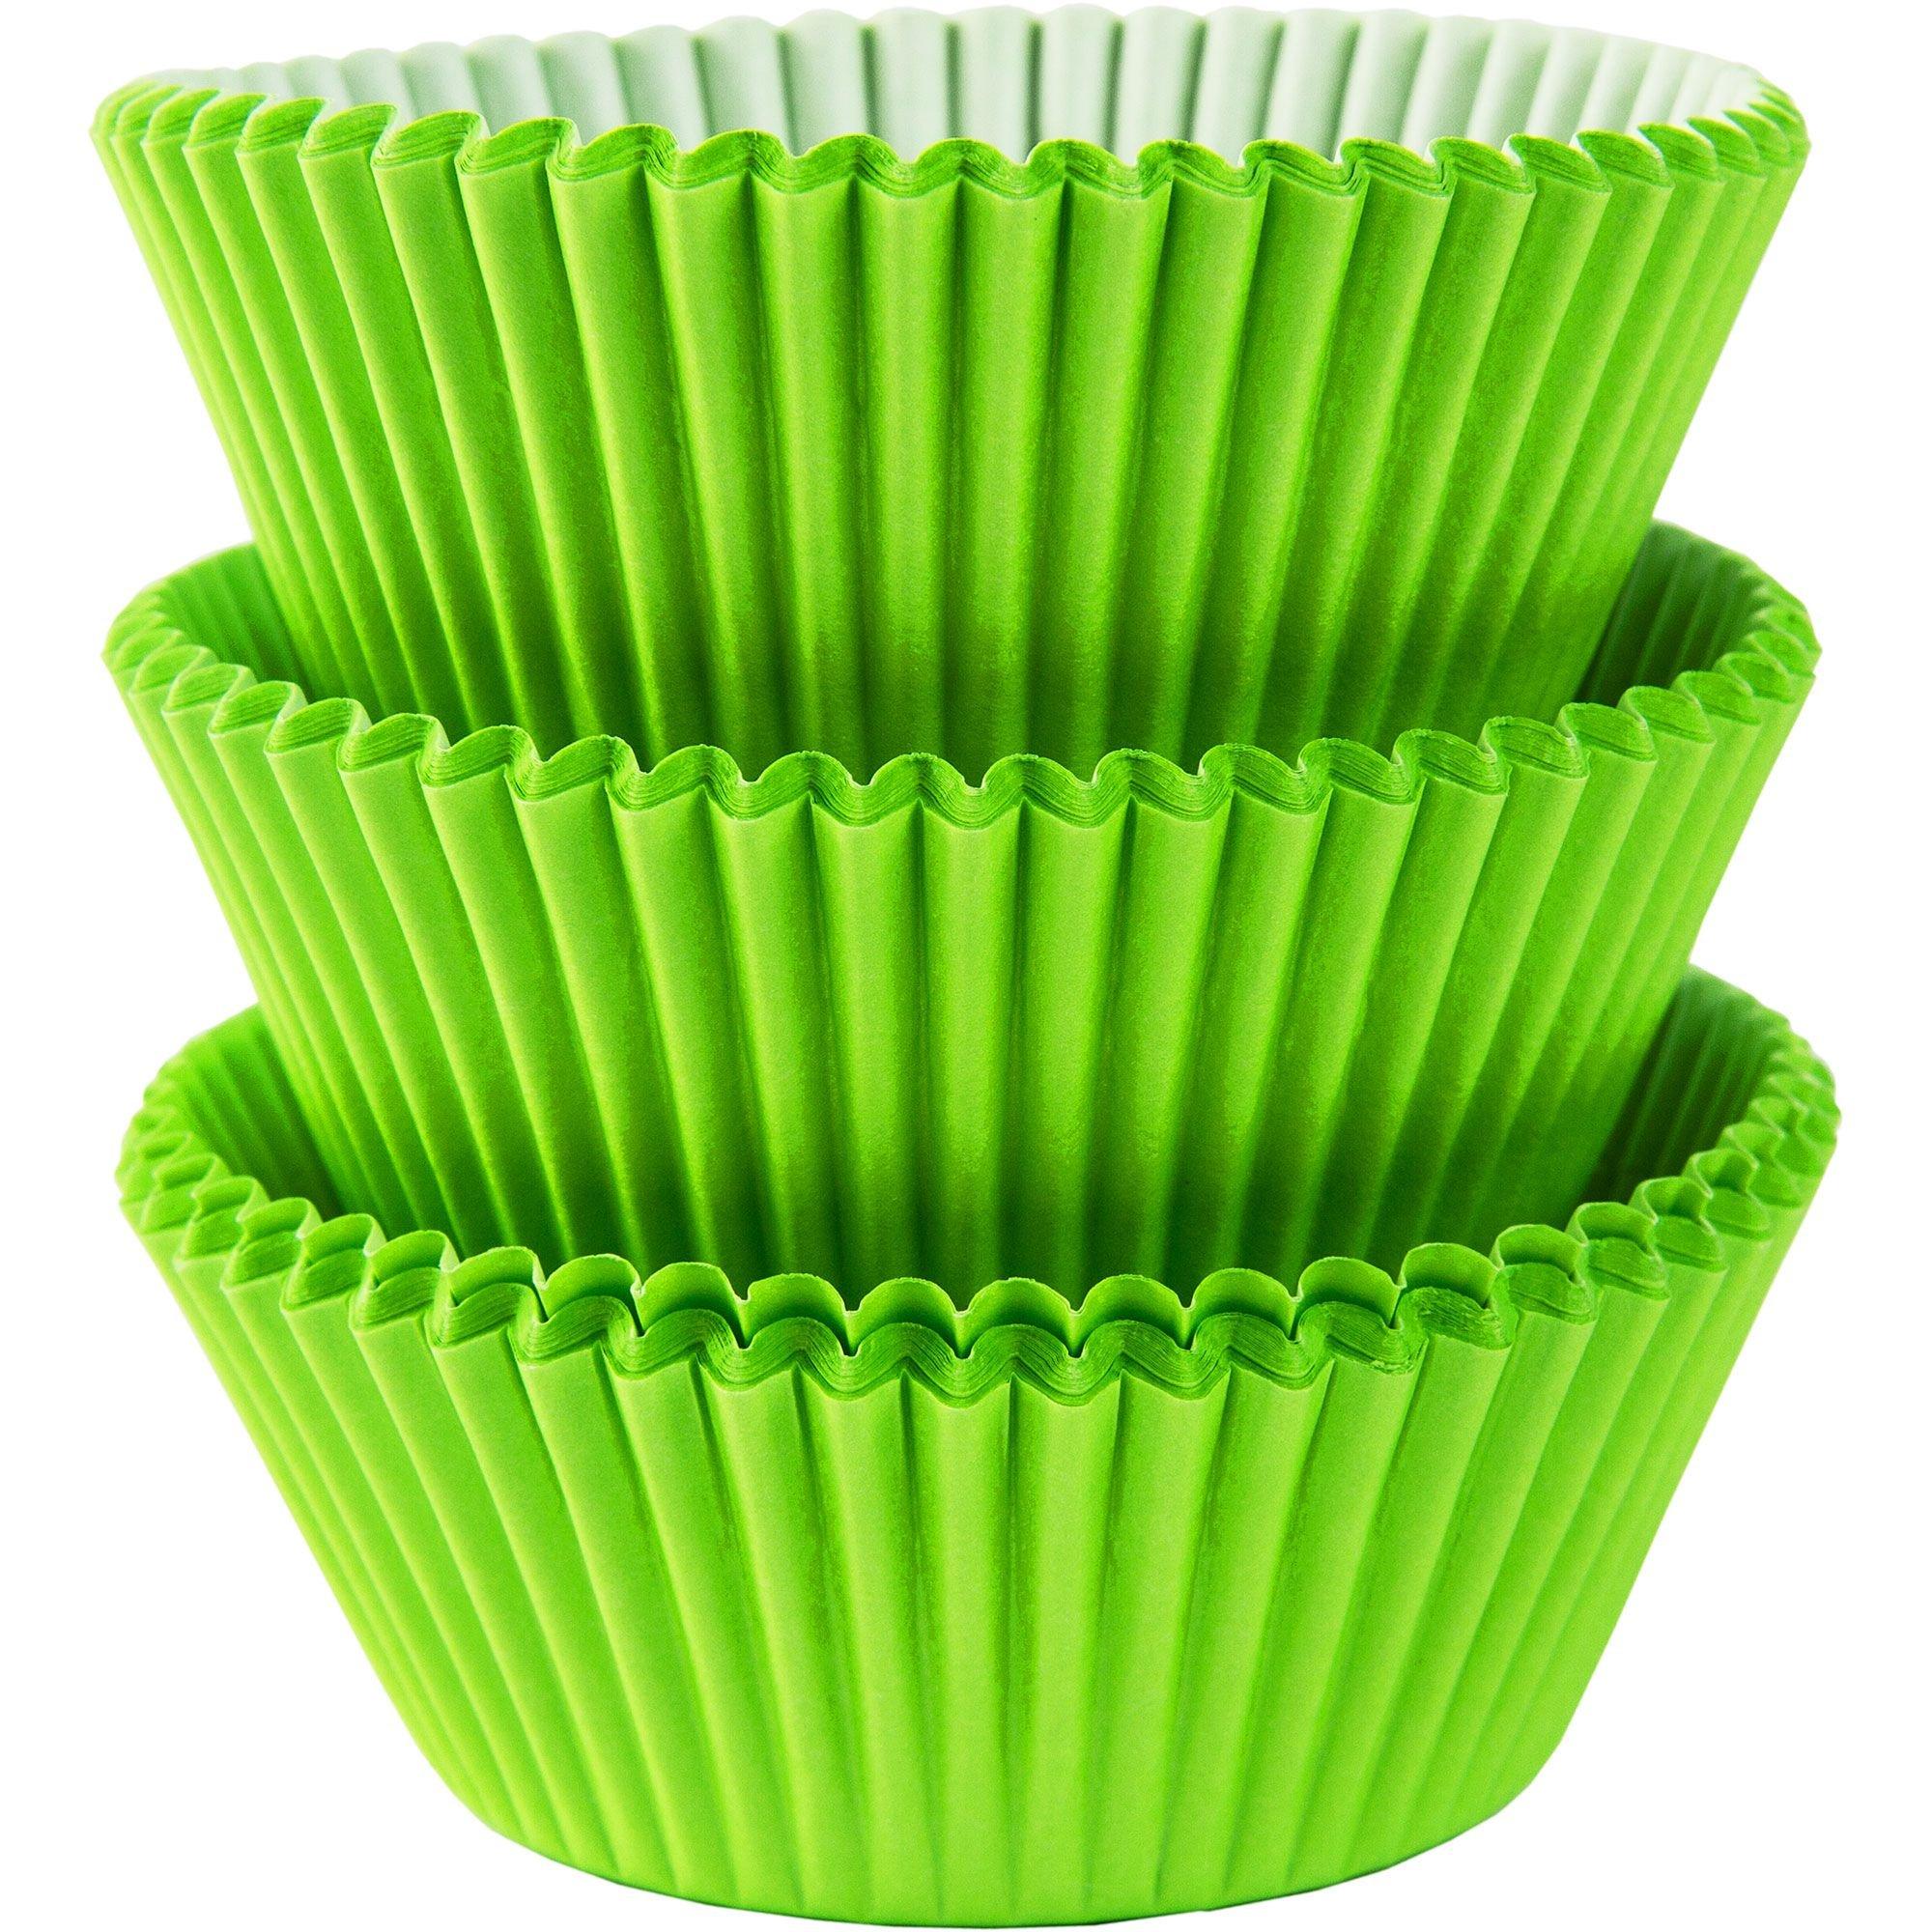 50pcs Cupcake Liners Green